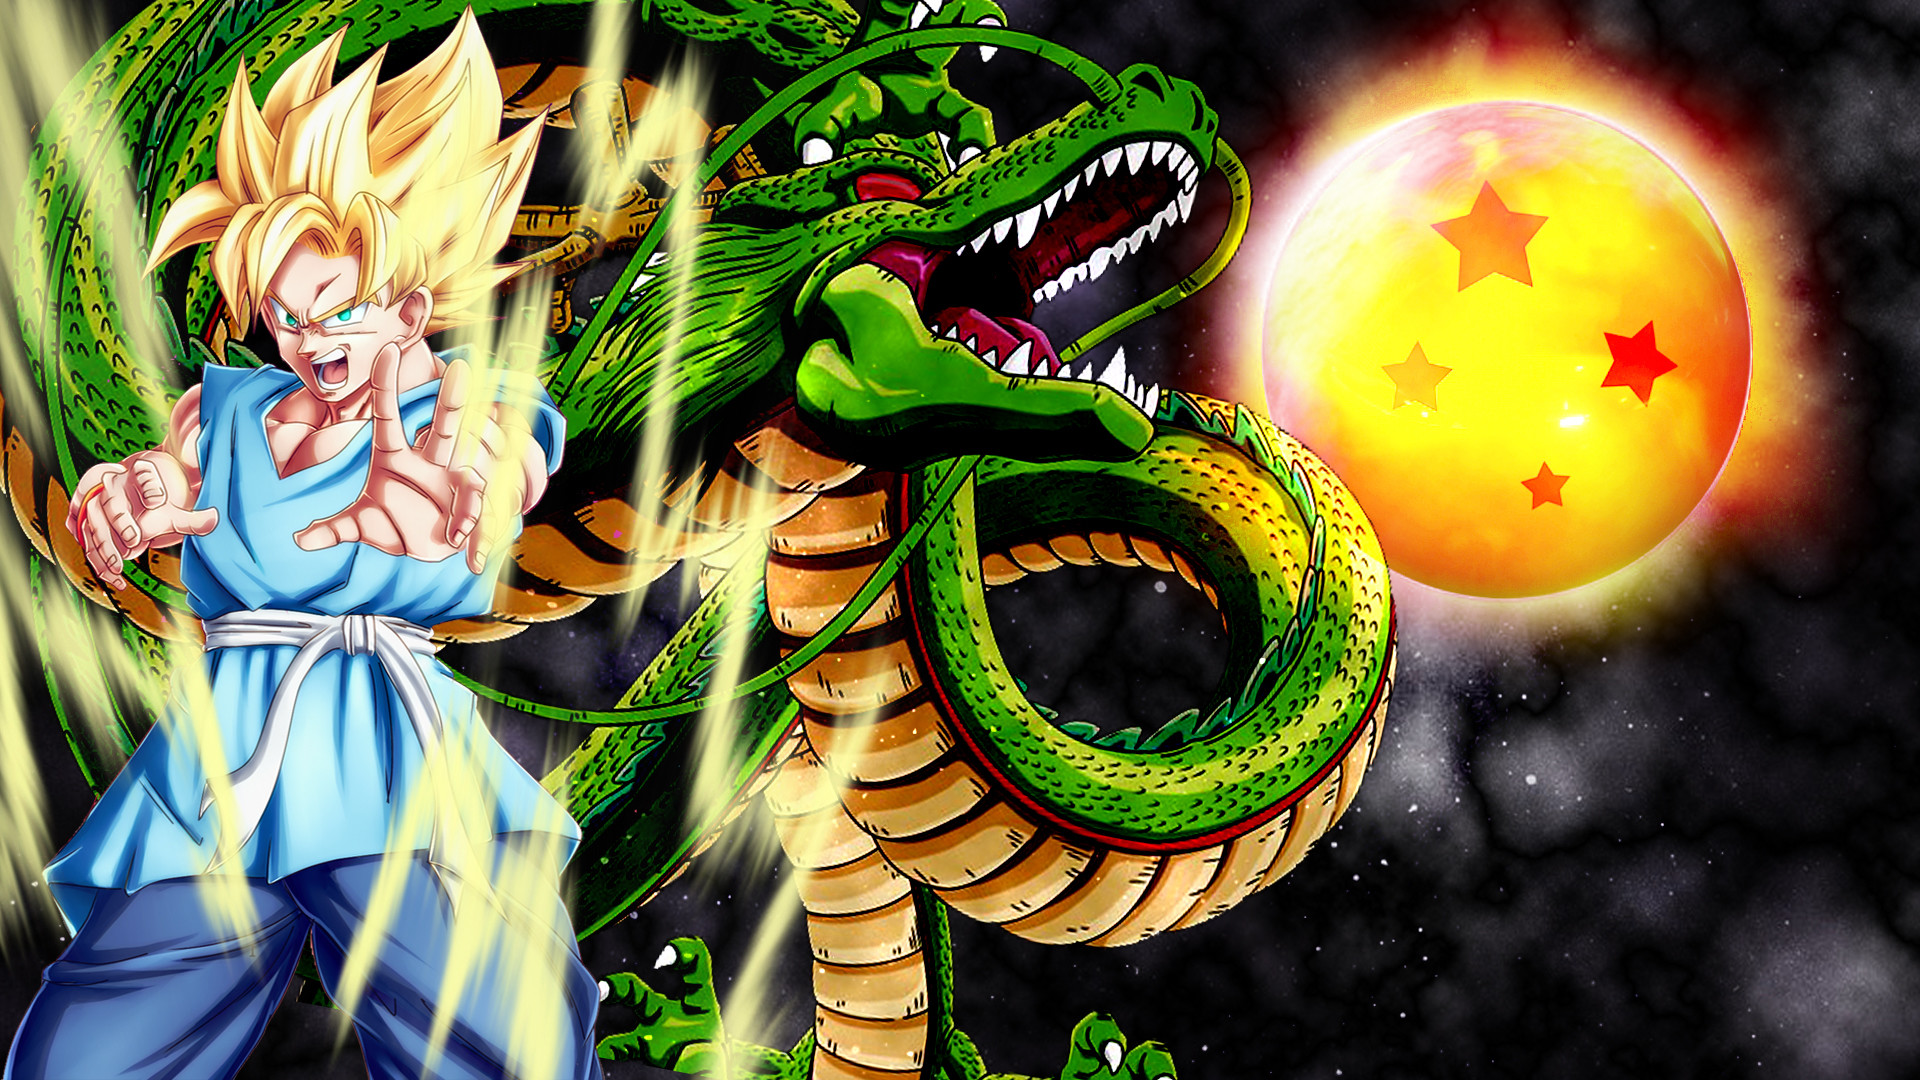 View and Download hd Goku Super Saiyan 4 Png - Super Saiyan 4 Goku Png PNG  Image for free. The image resolut…